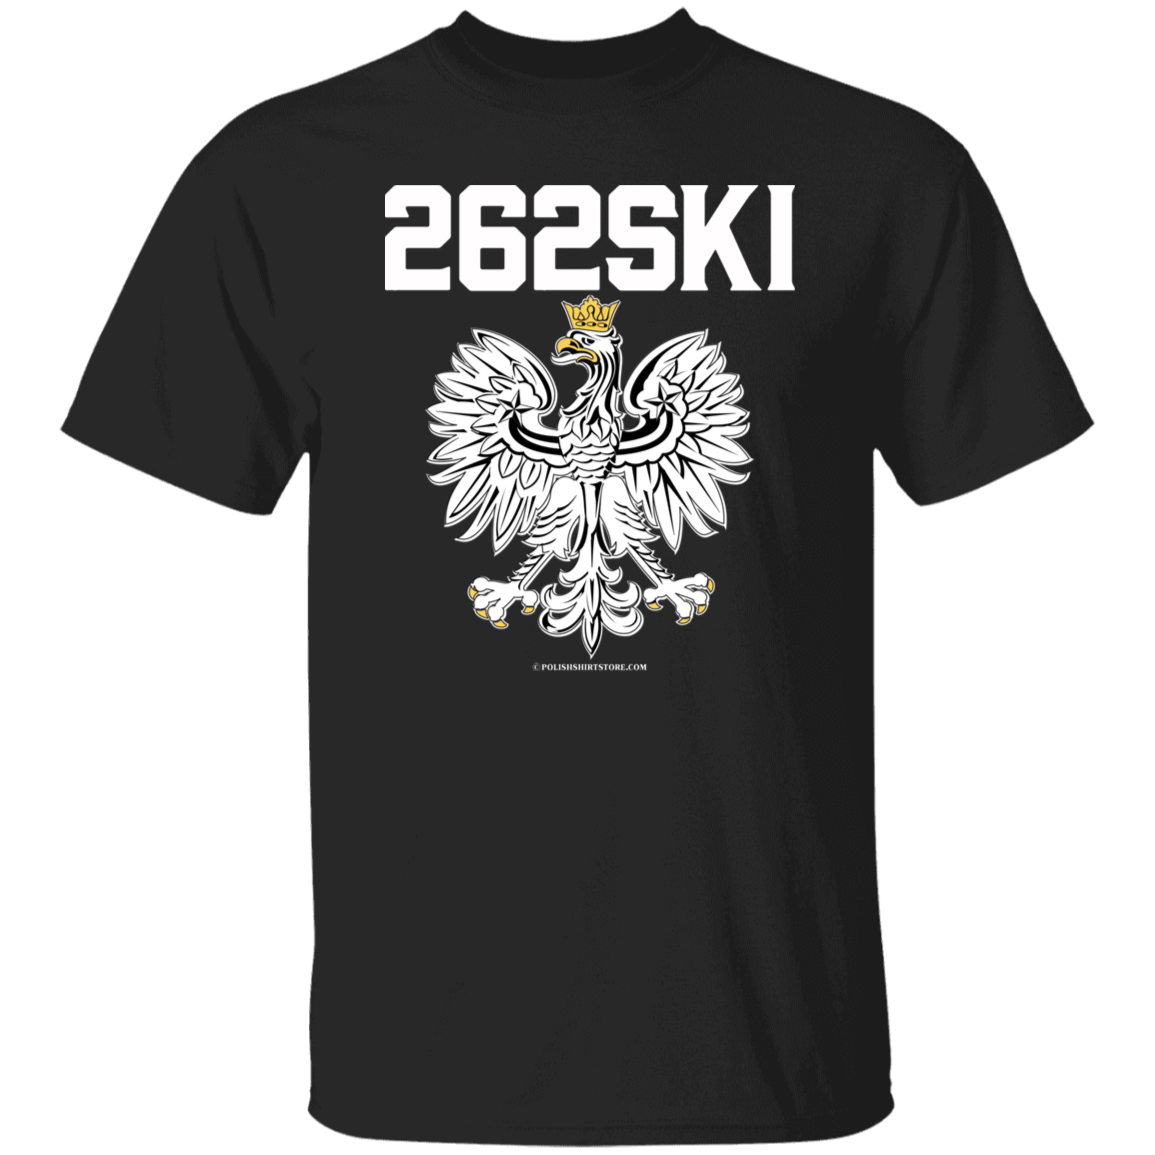 262SKI Apparel CustomCat G500 5.3 oz. T-Shirt Black S